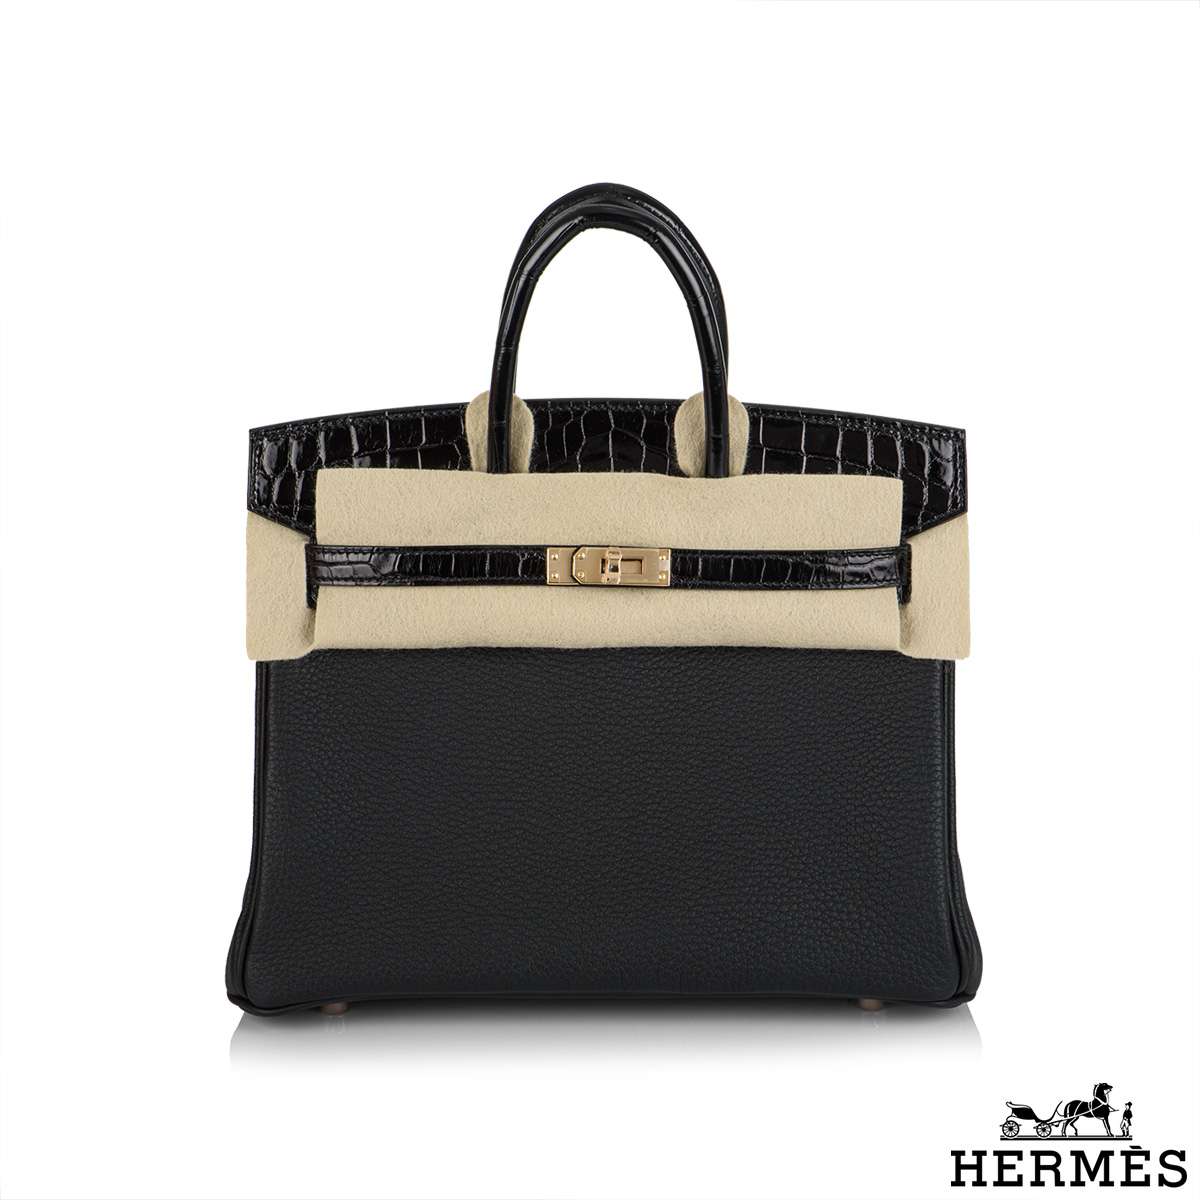 Hermès Birkin 25 Black Togo Rose Gold Hardware - 2020, Y